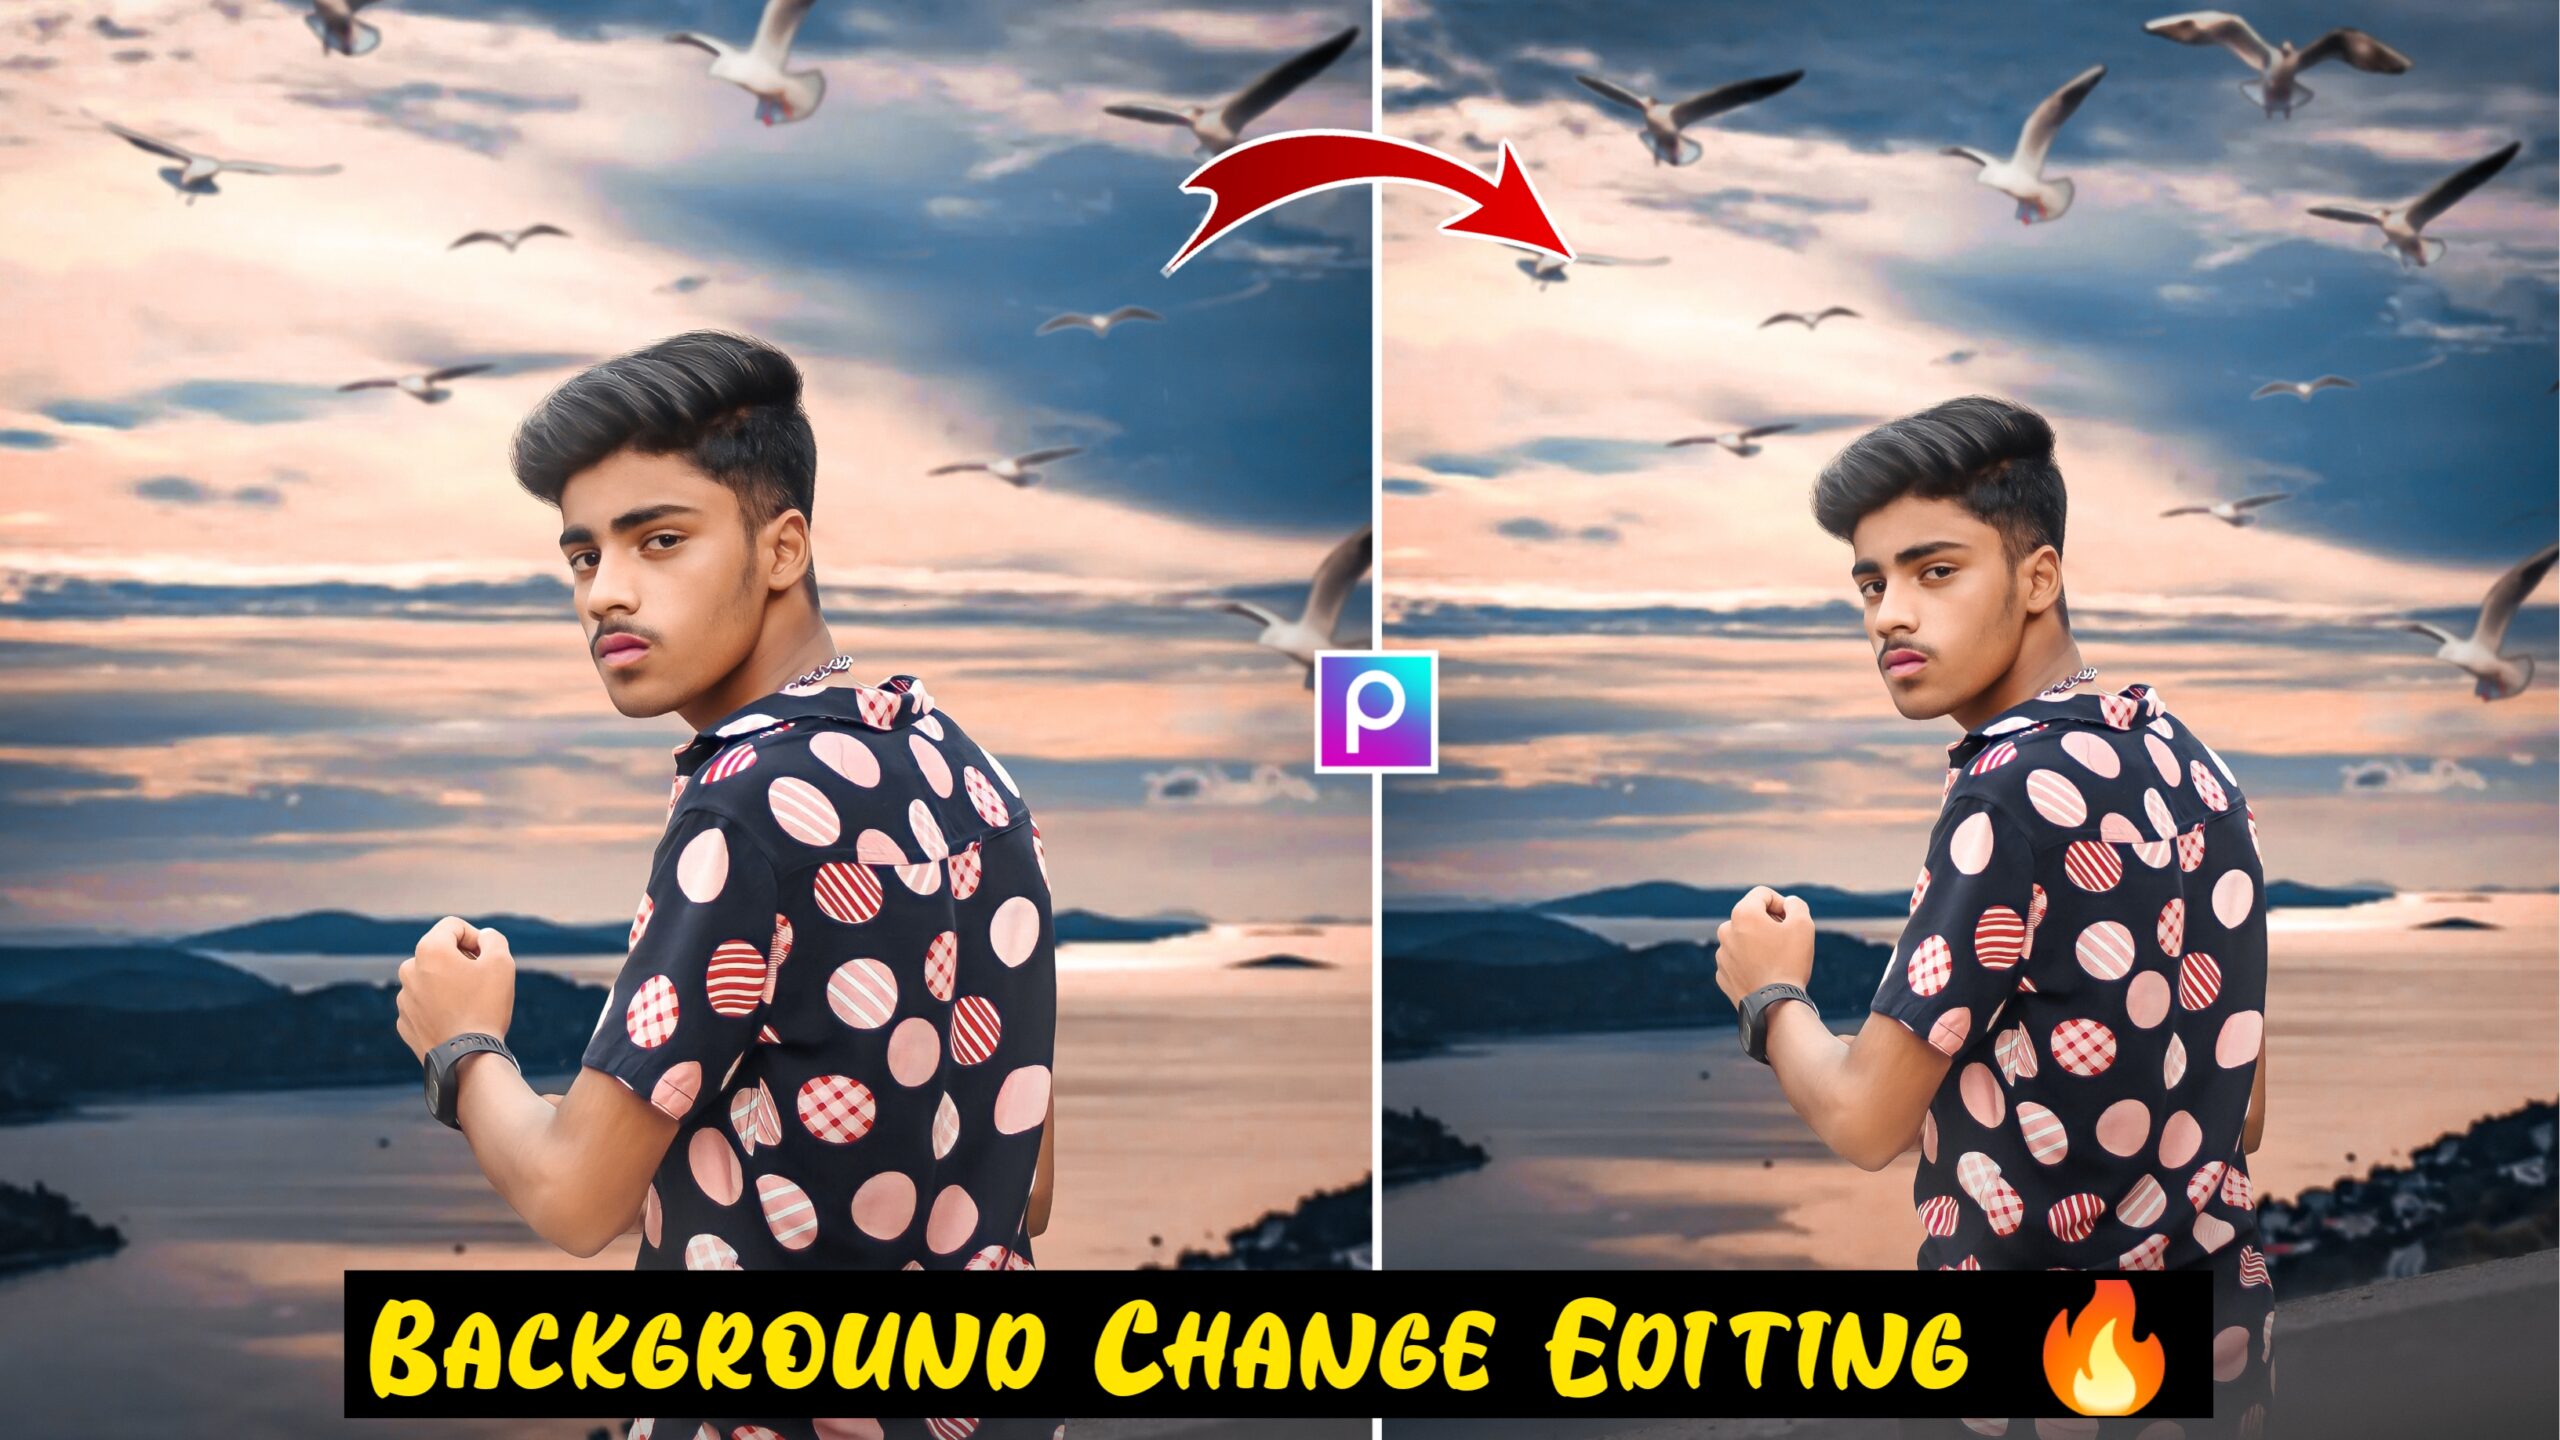 Background Change Editing In PicsArt Download Background  PNG  Tahir Editz